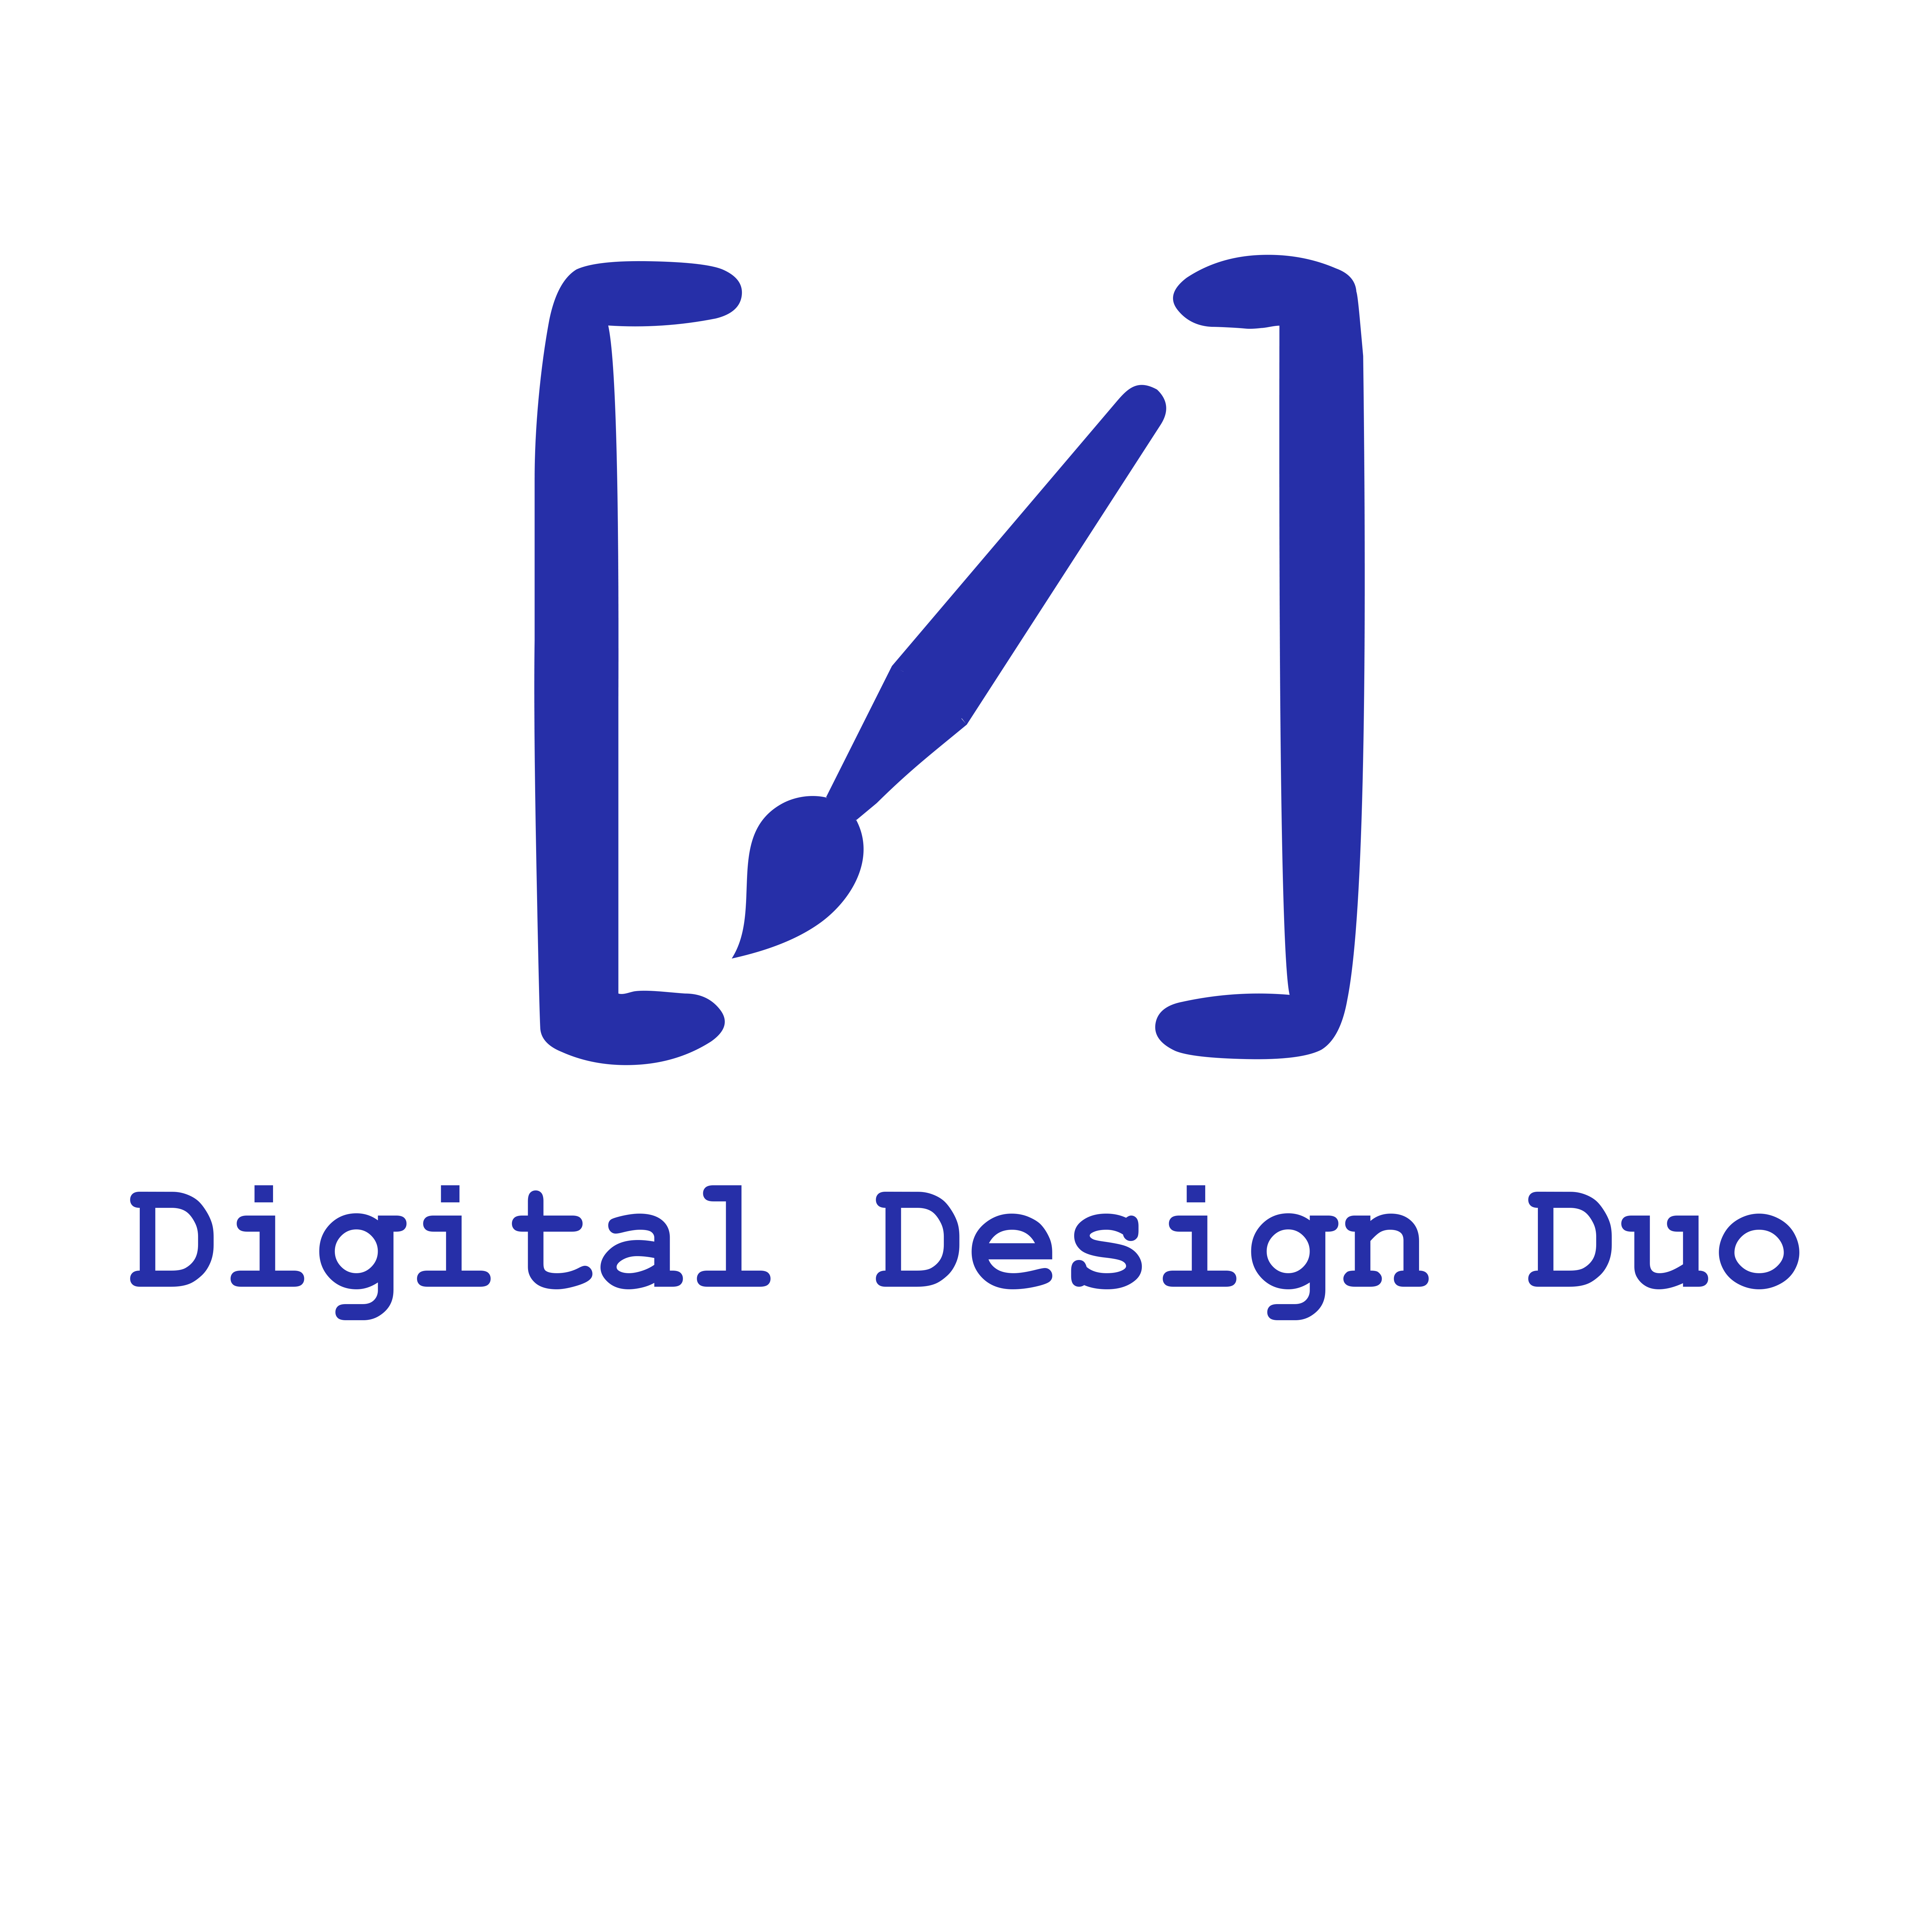 Digital Design Duo logo